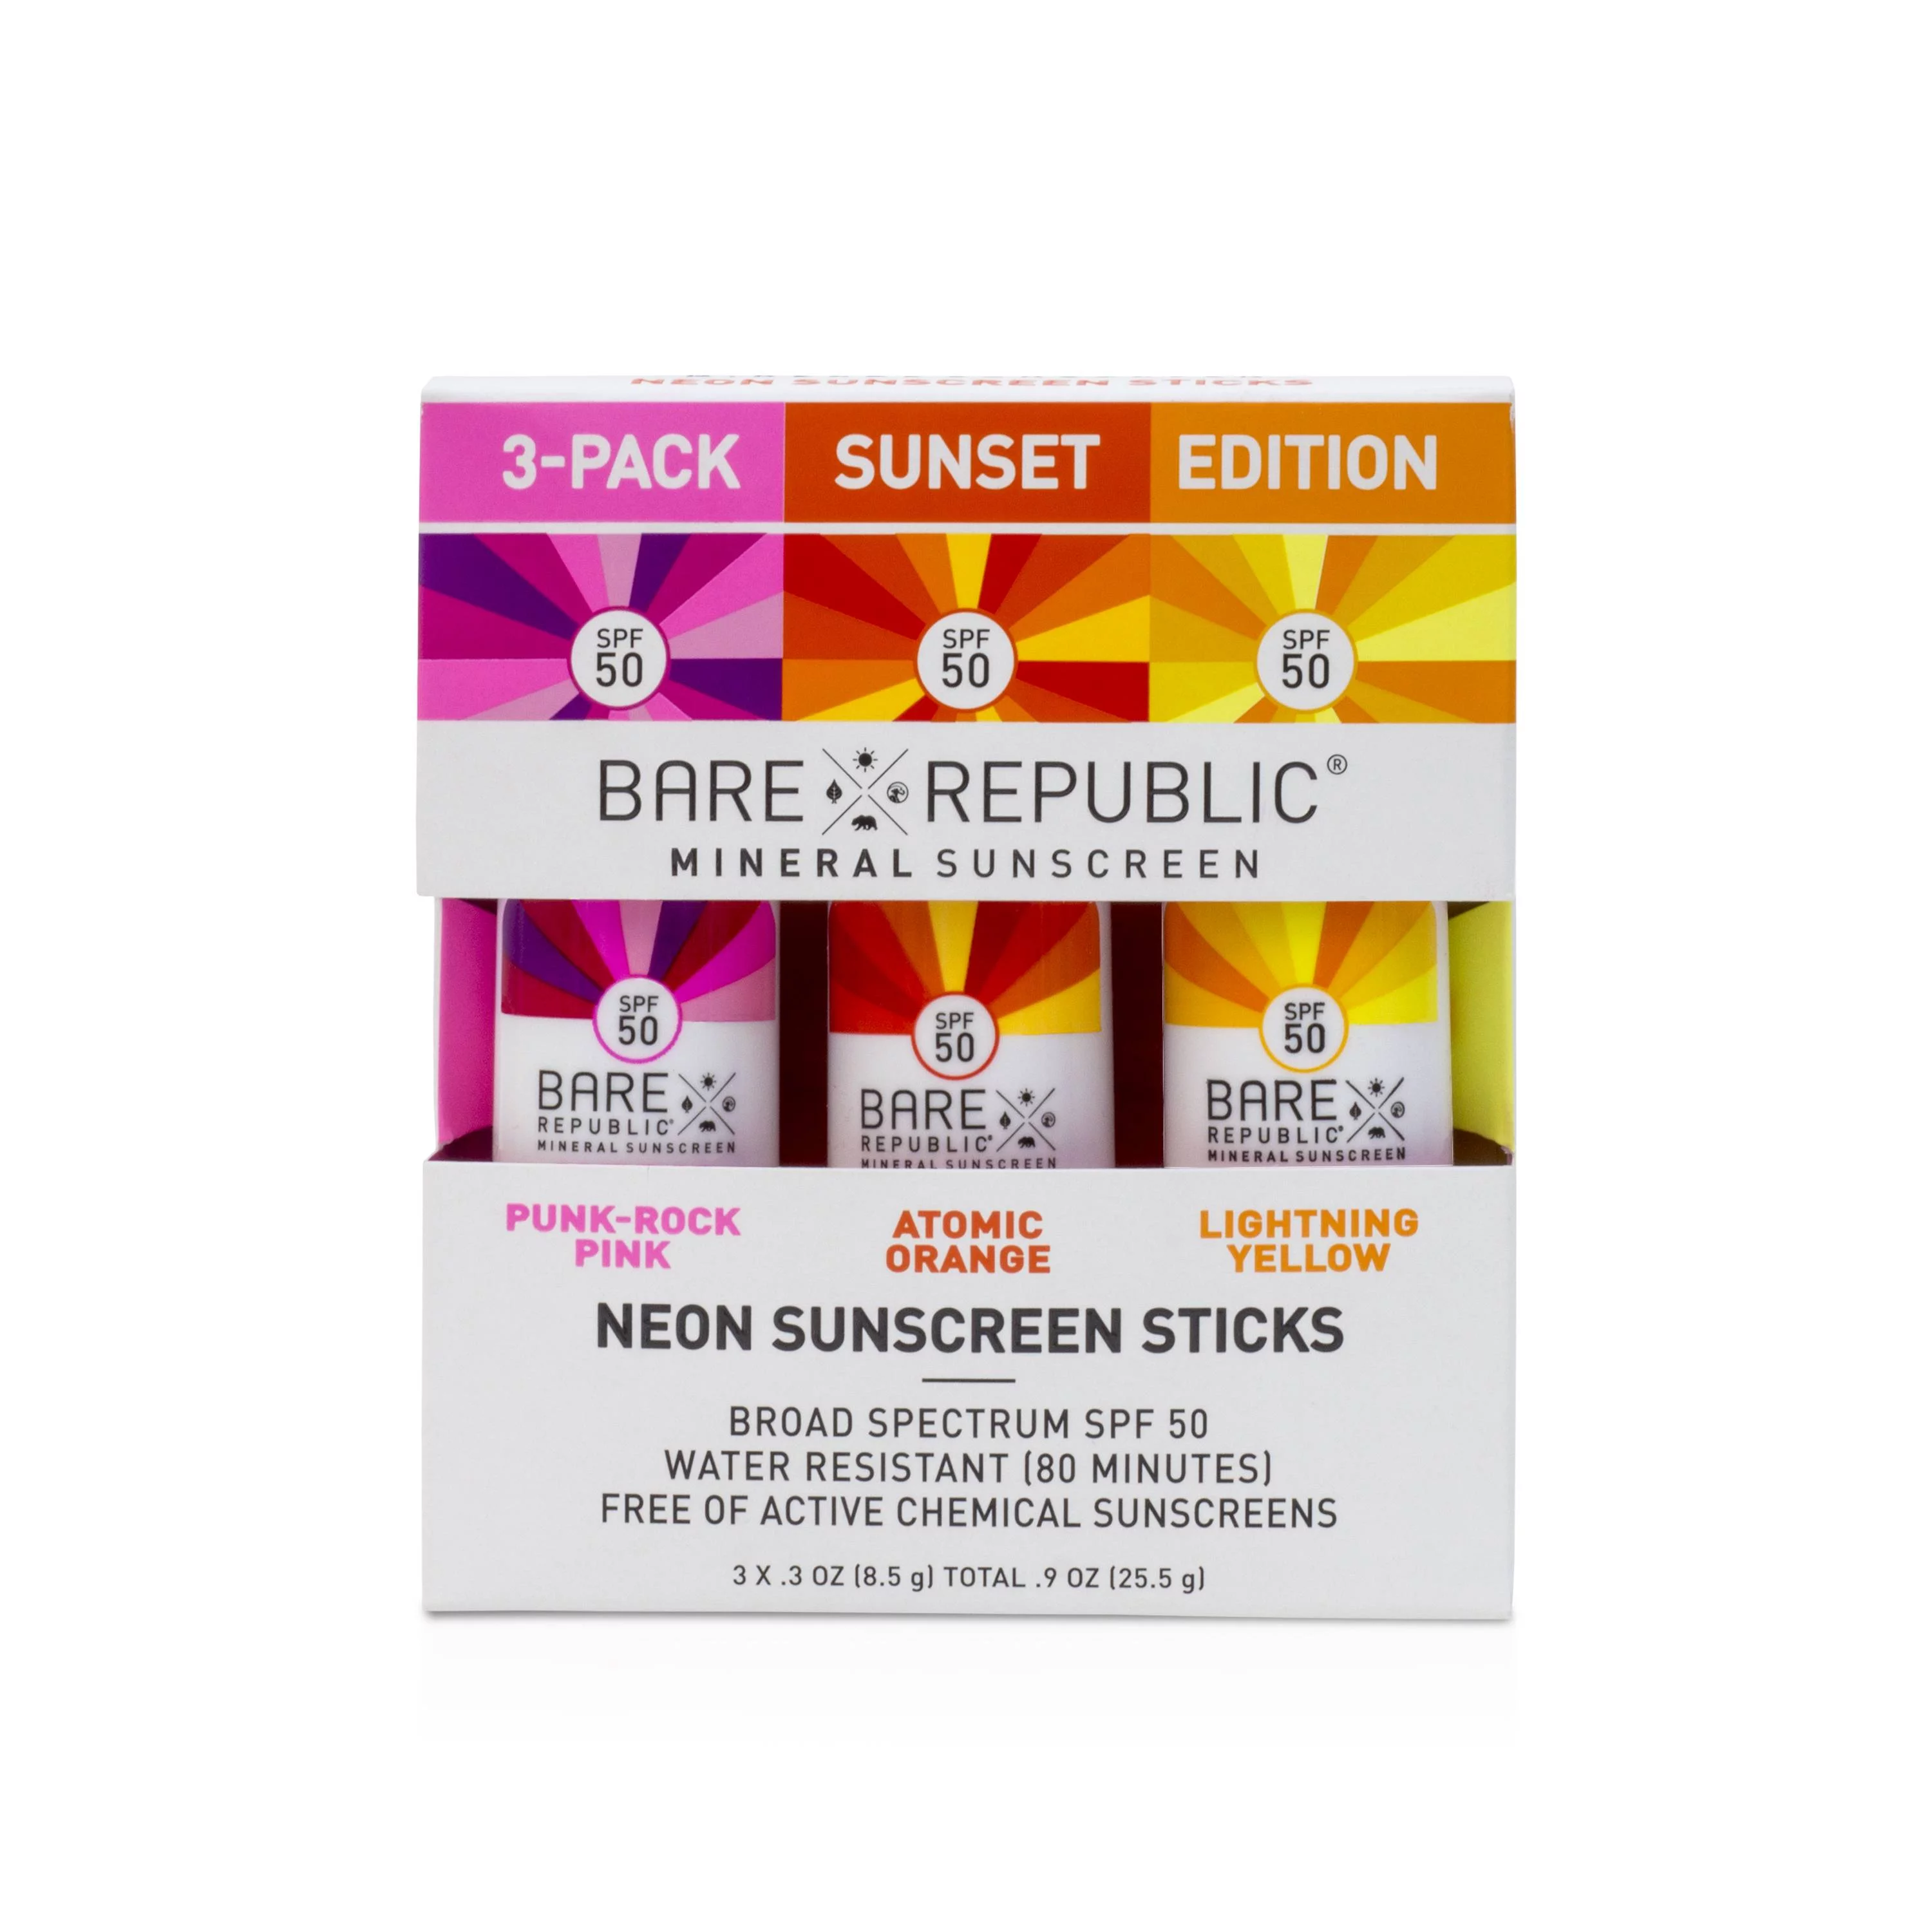 Bare Republic Mineral SPF 50 Neon Sunscreen Stick 3-Pack - Sunset Edition - Pink, Orange, Yellow